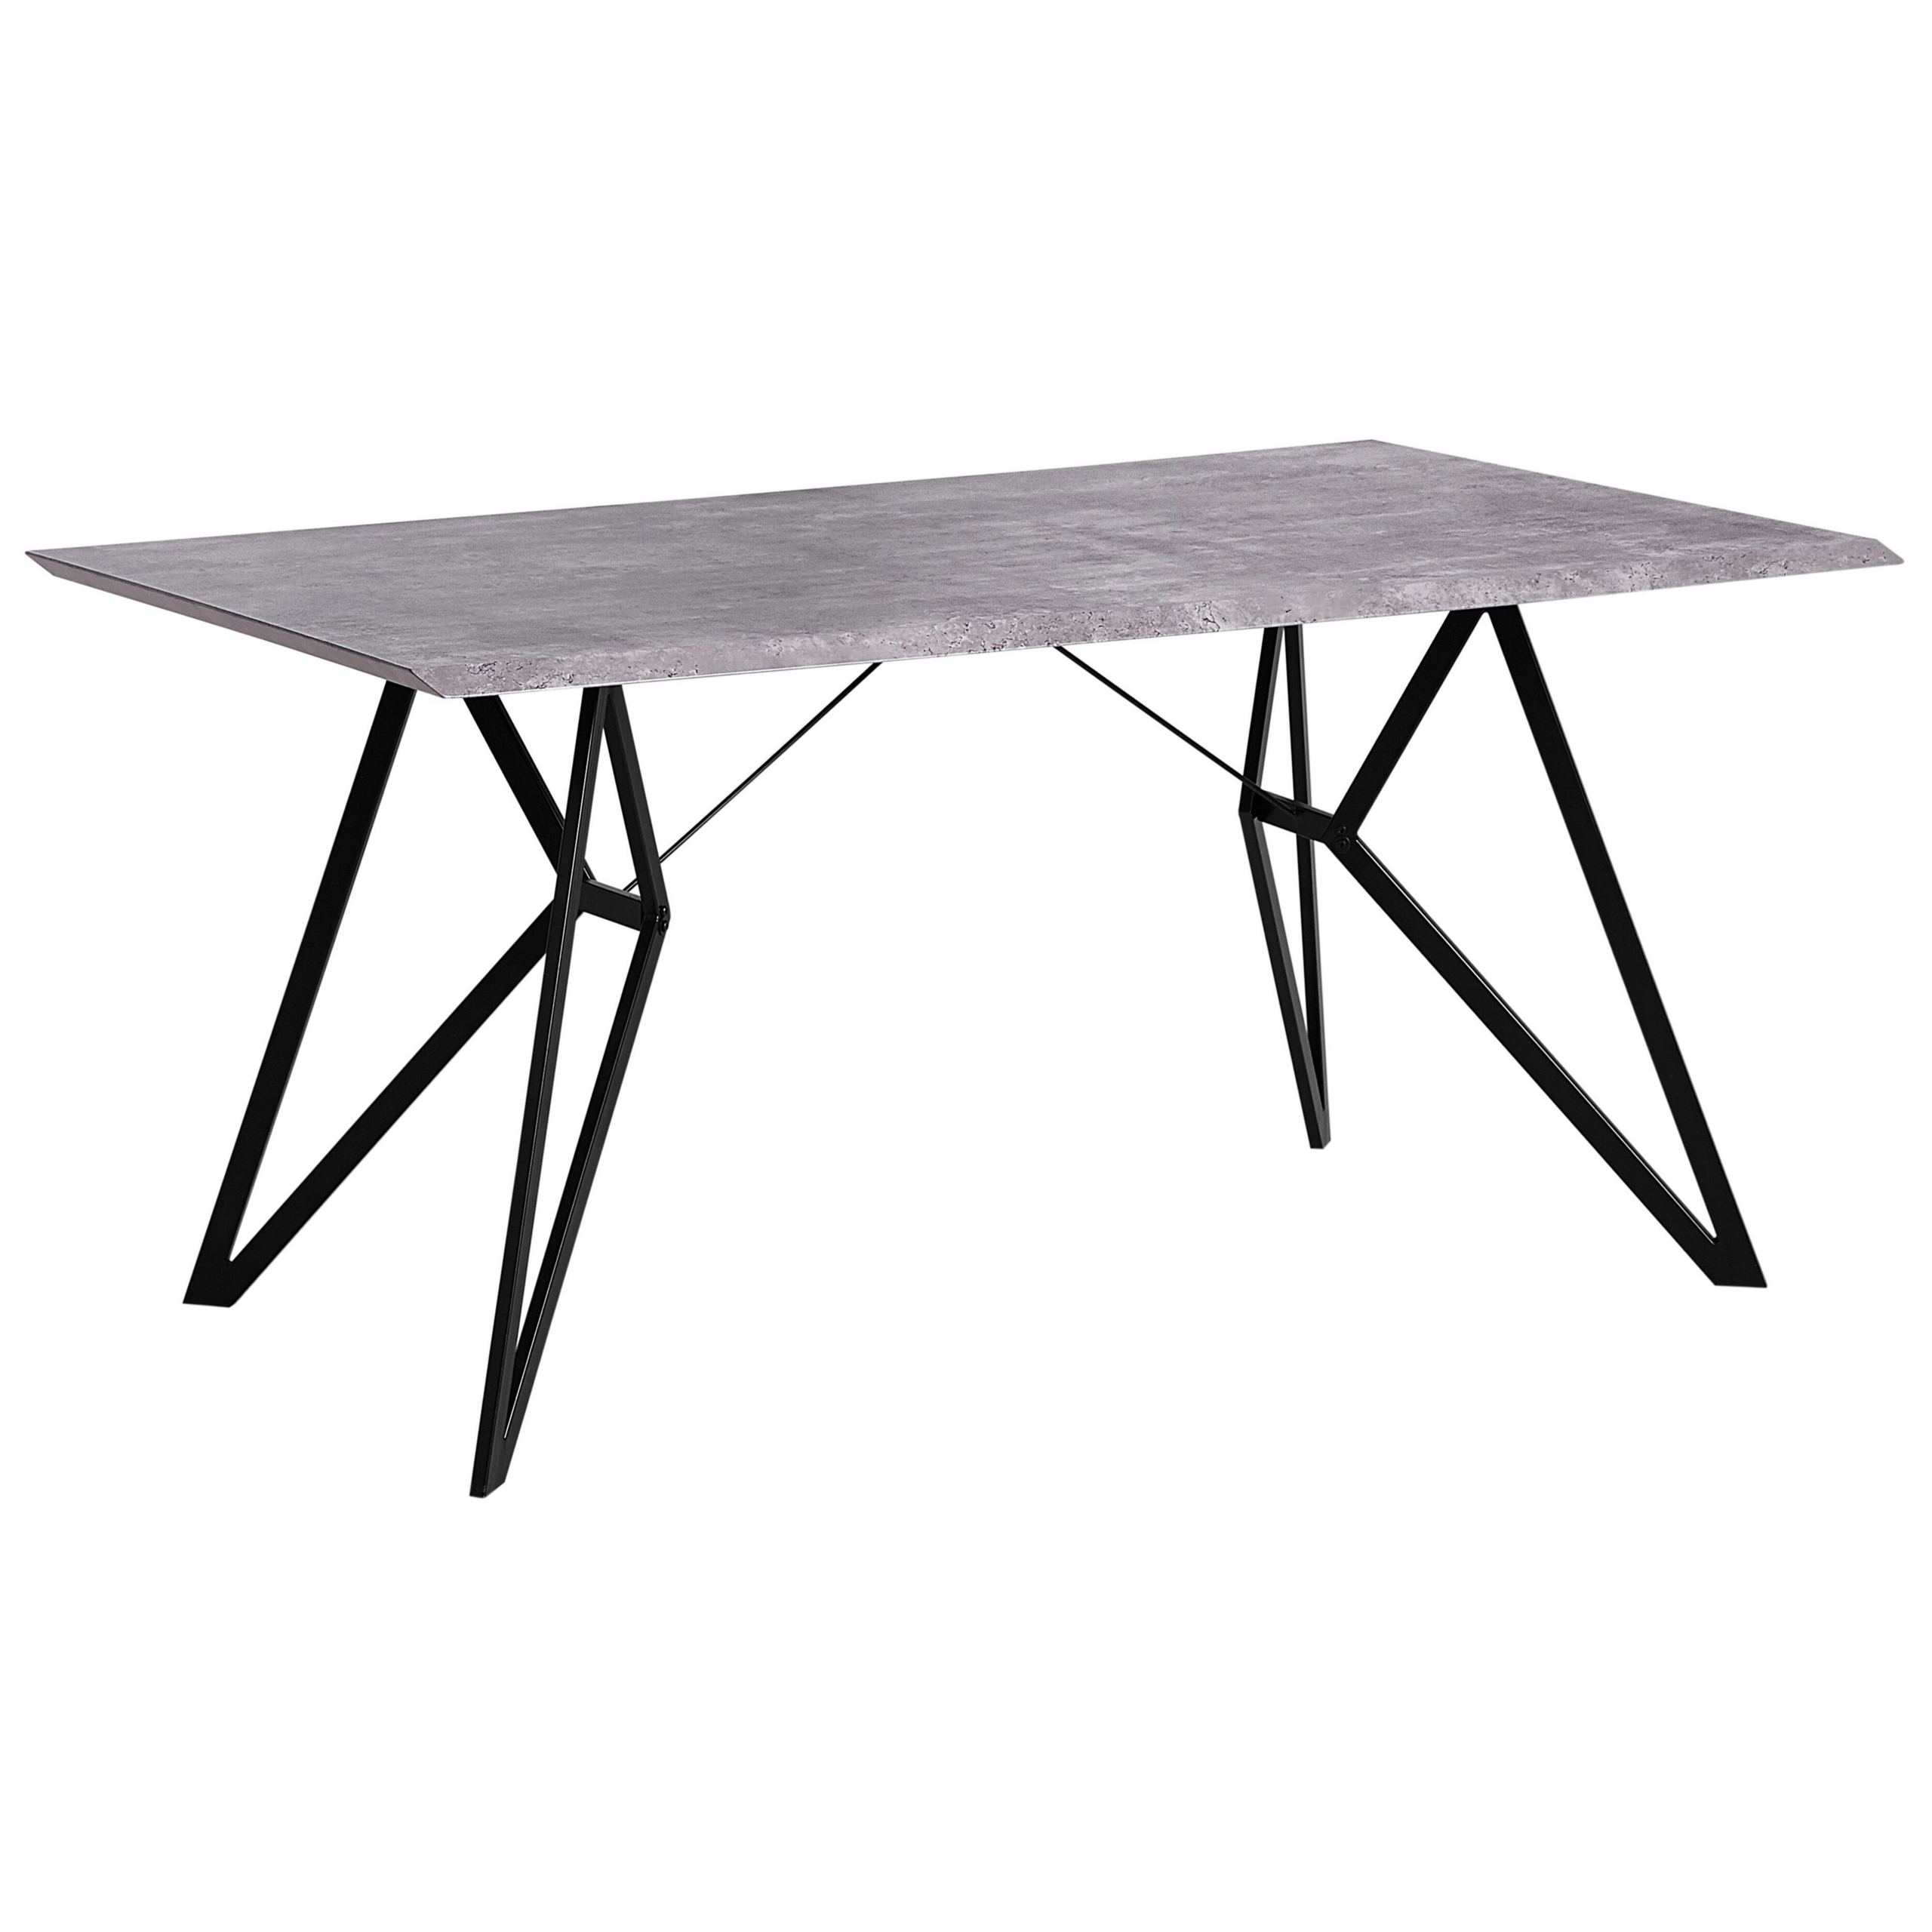 Beliani Dining Table Concrete Effect 160 x 90 cm Black Metal Legs Industrial Kitchen